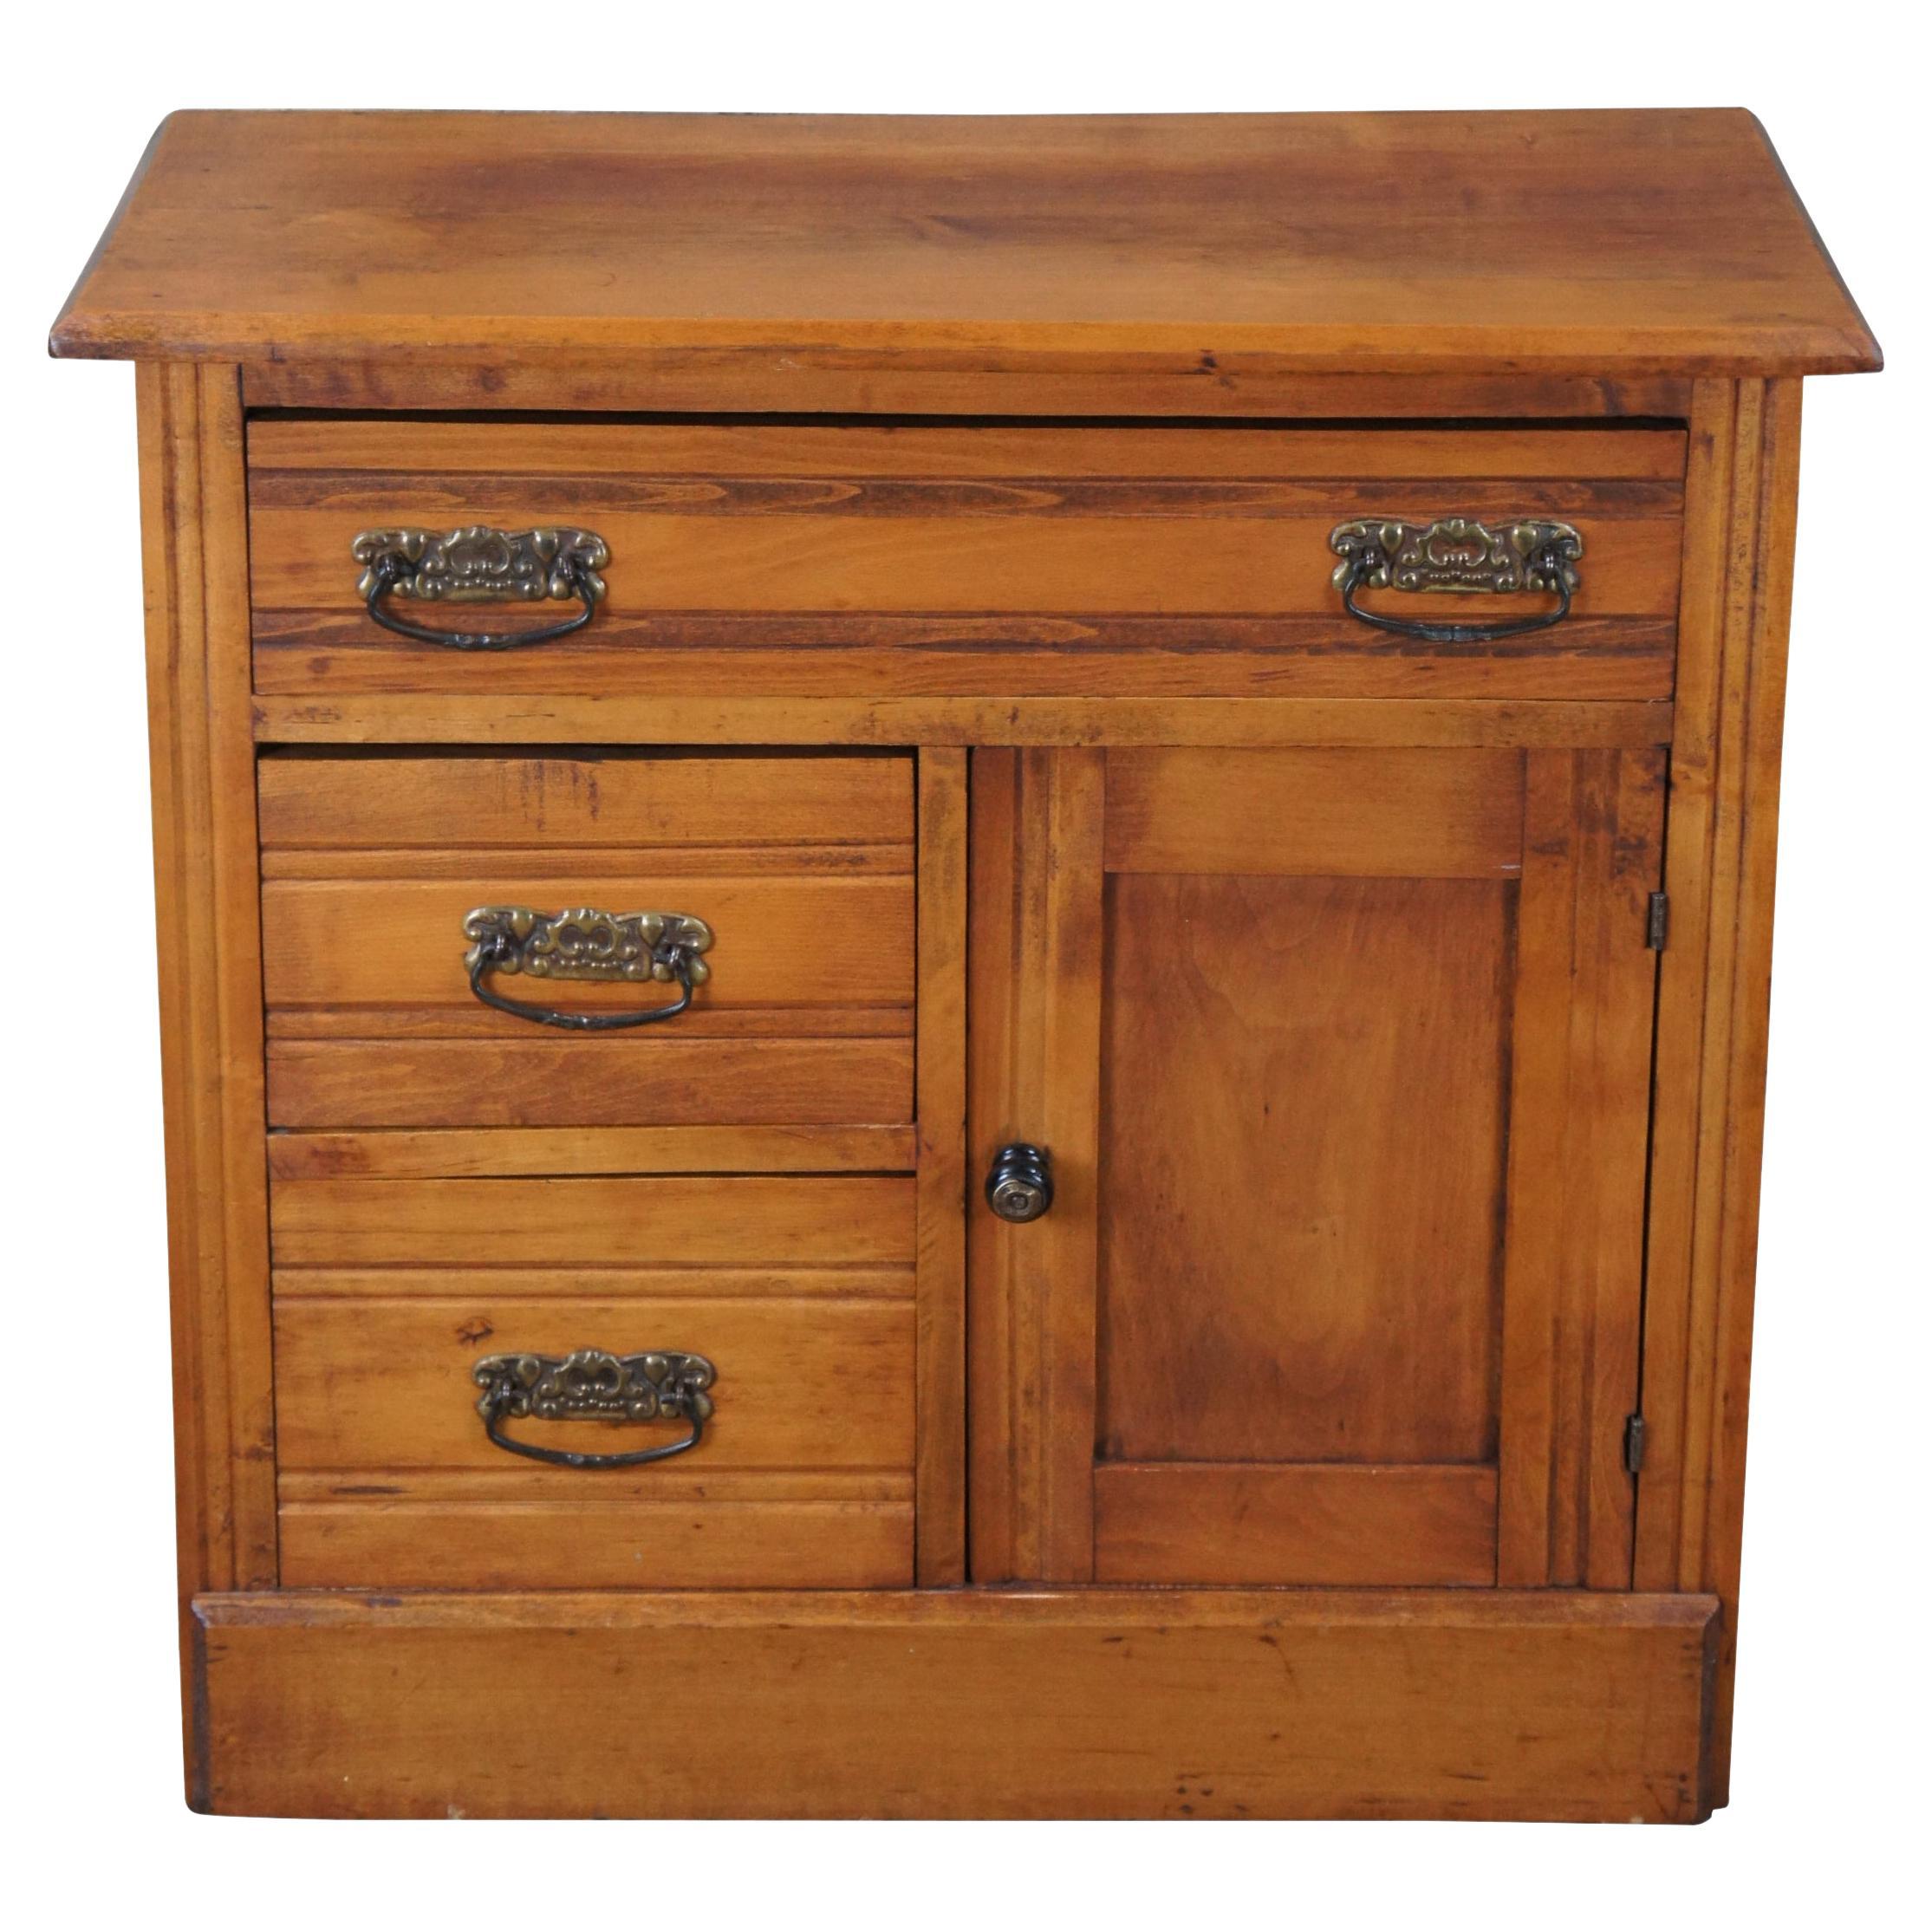 Antique Late Victorian Eastlake Oak Washstand Cabinet Chest Dresser 30"